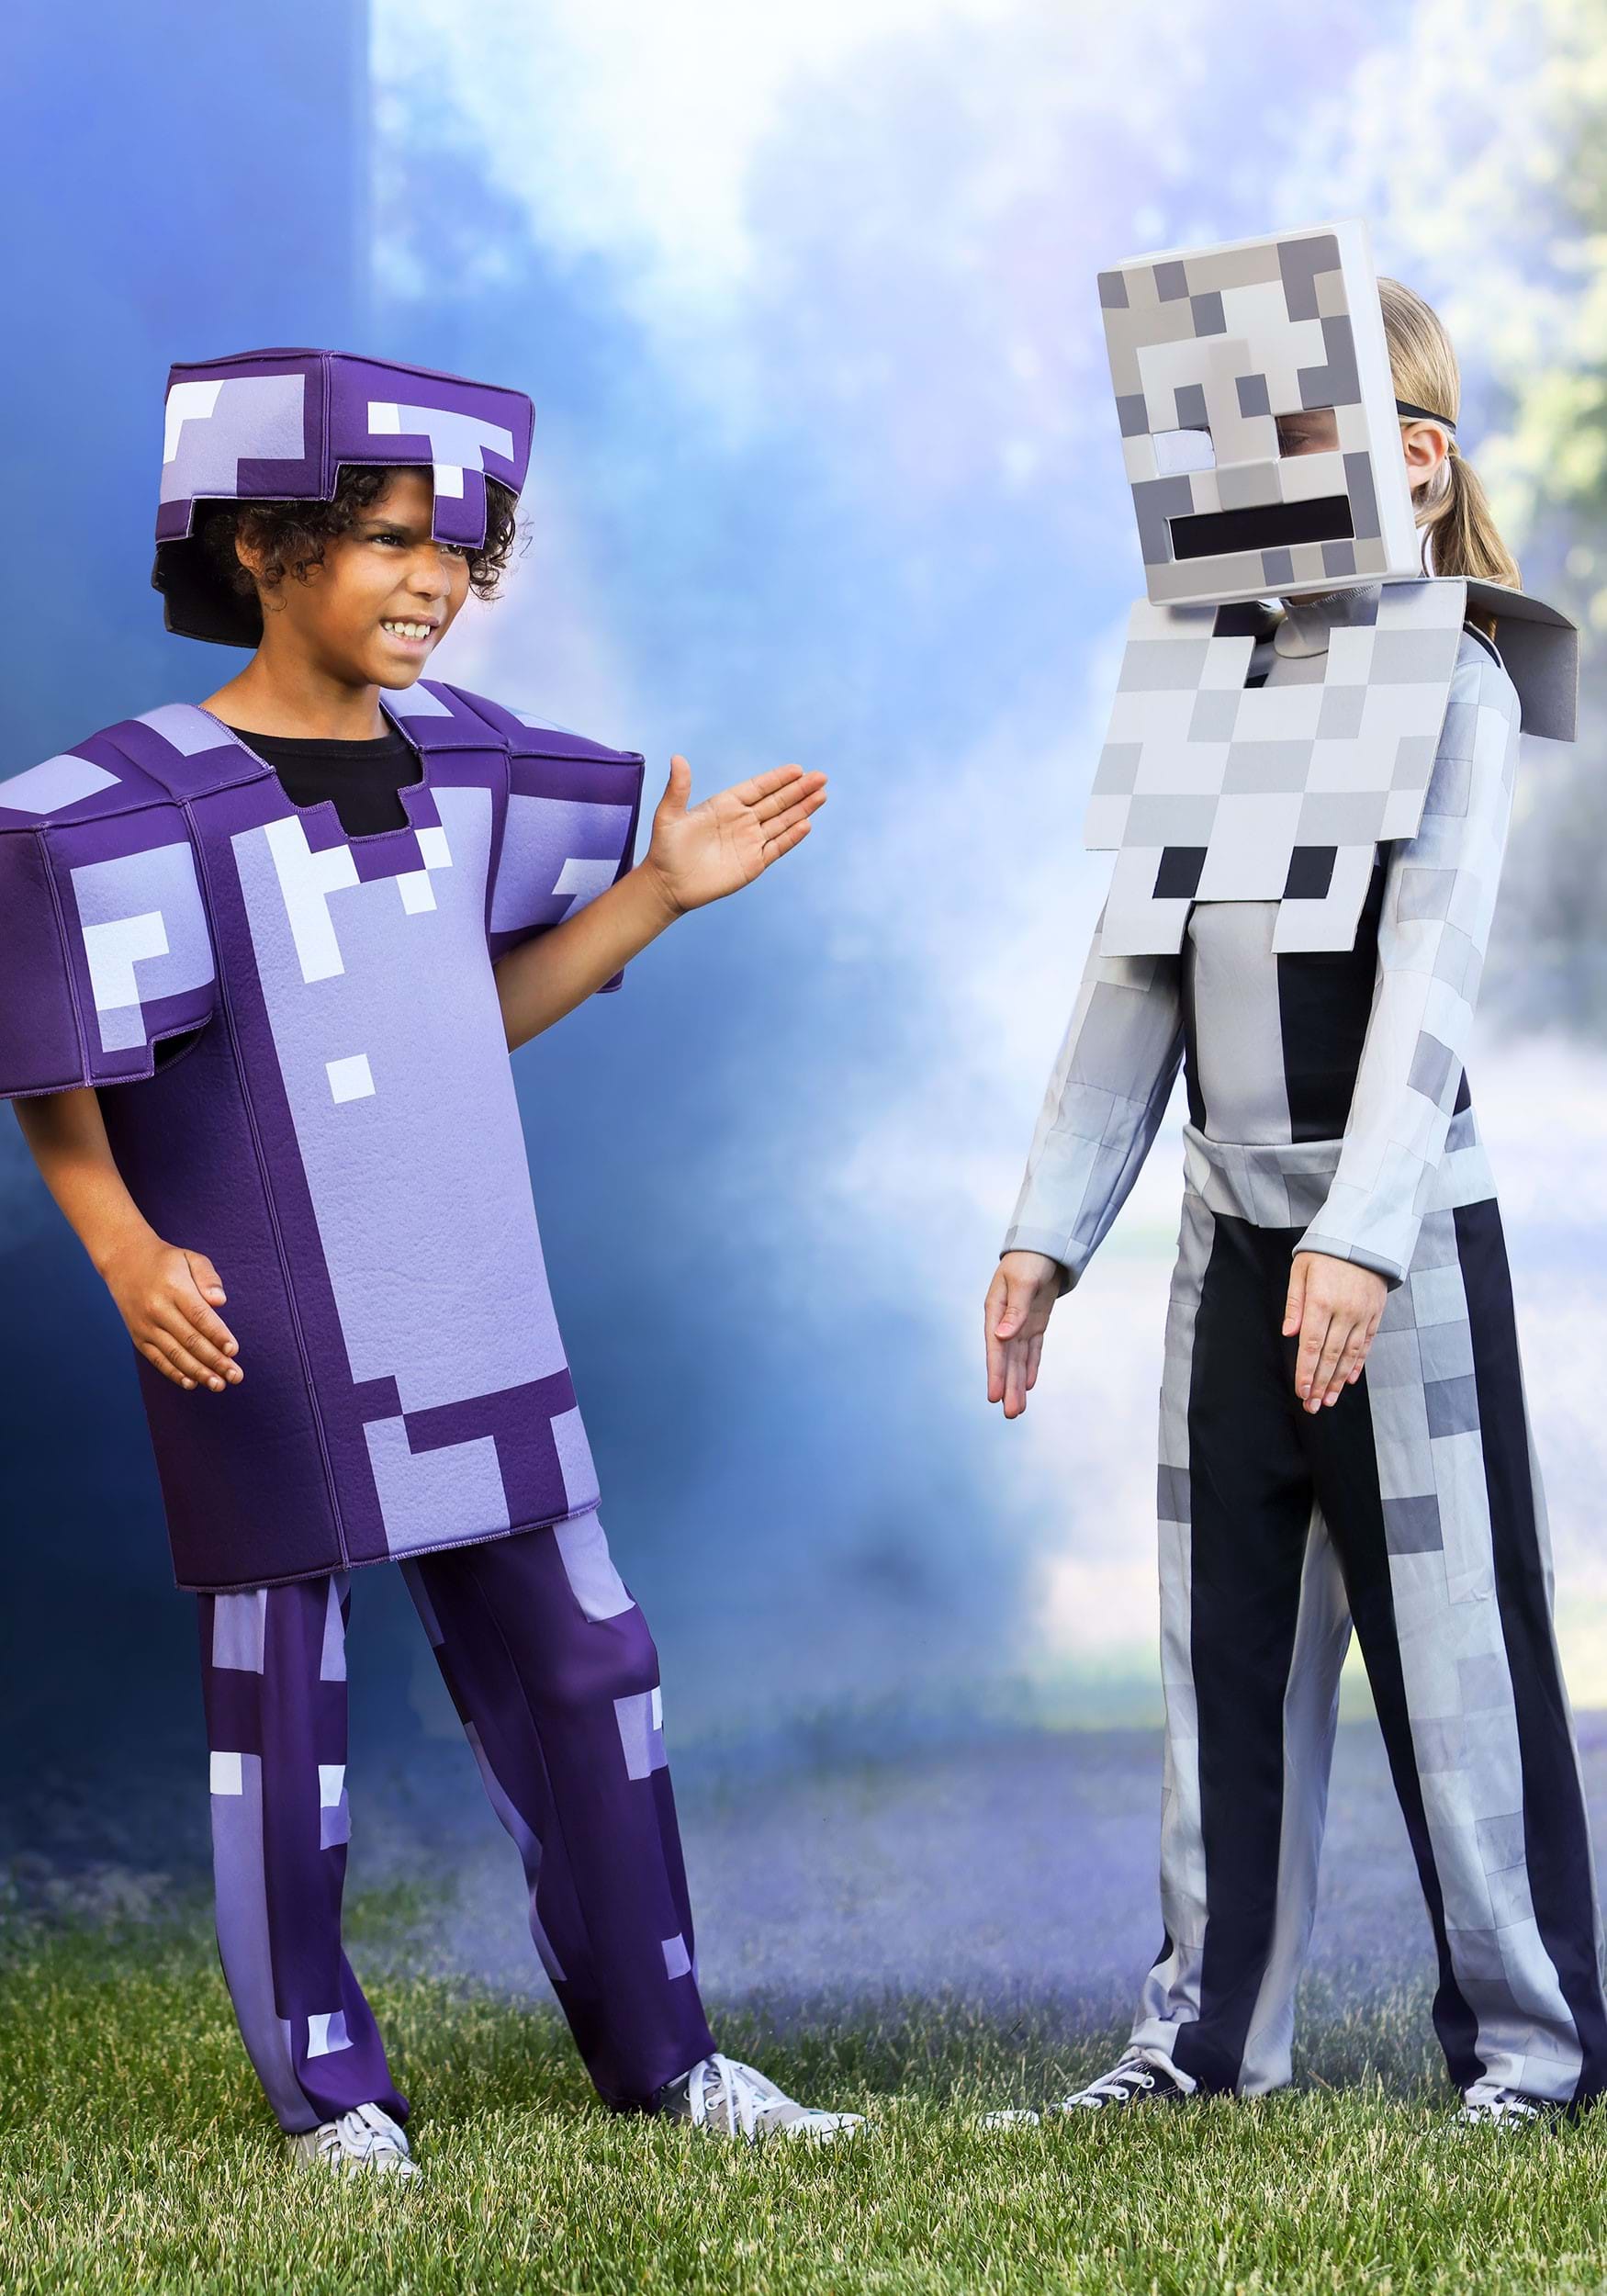 Minecraft Kid's Enderman Deluxe Costume